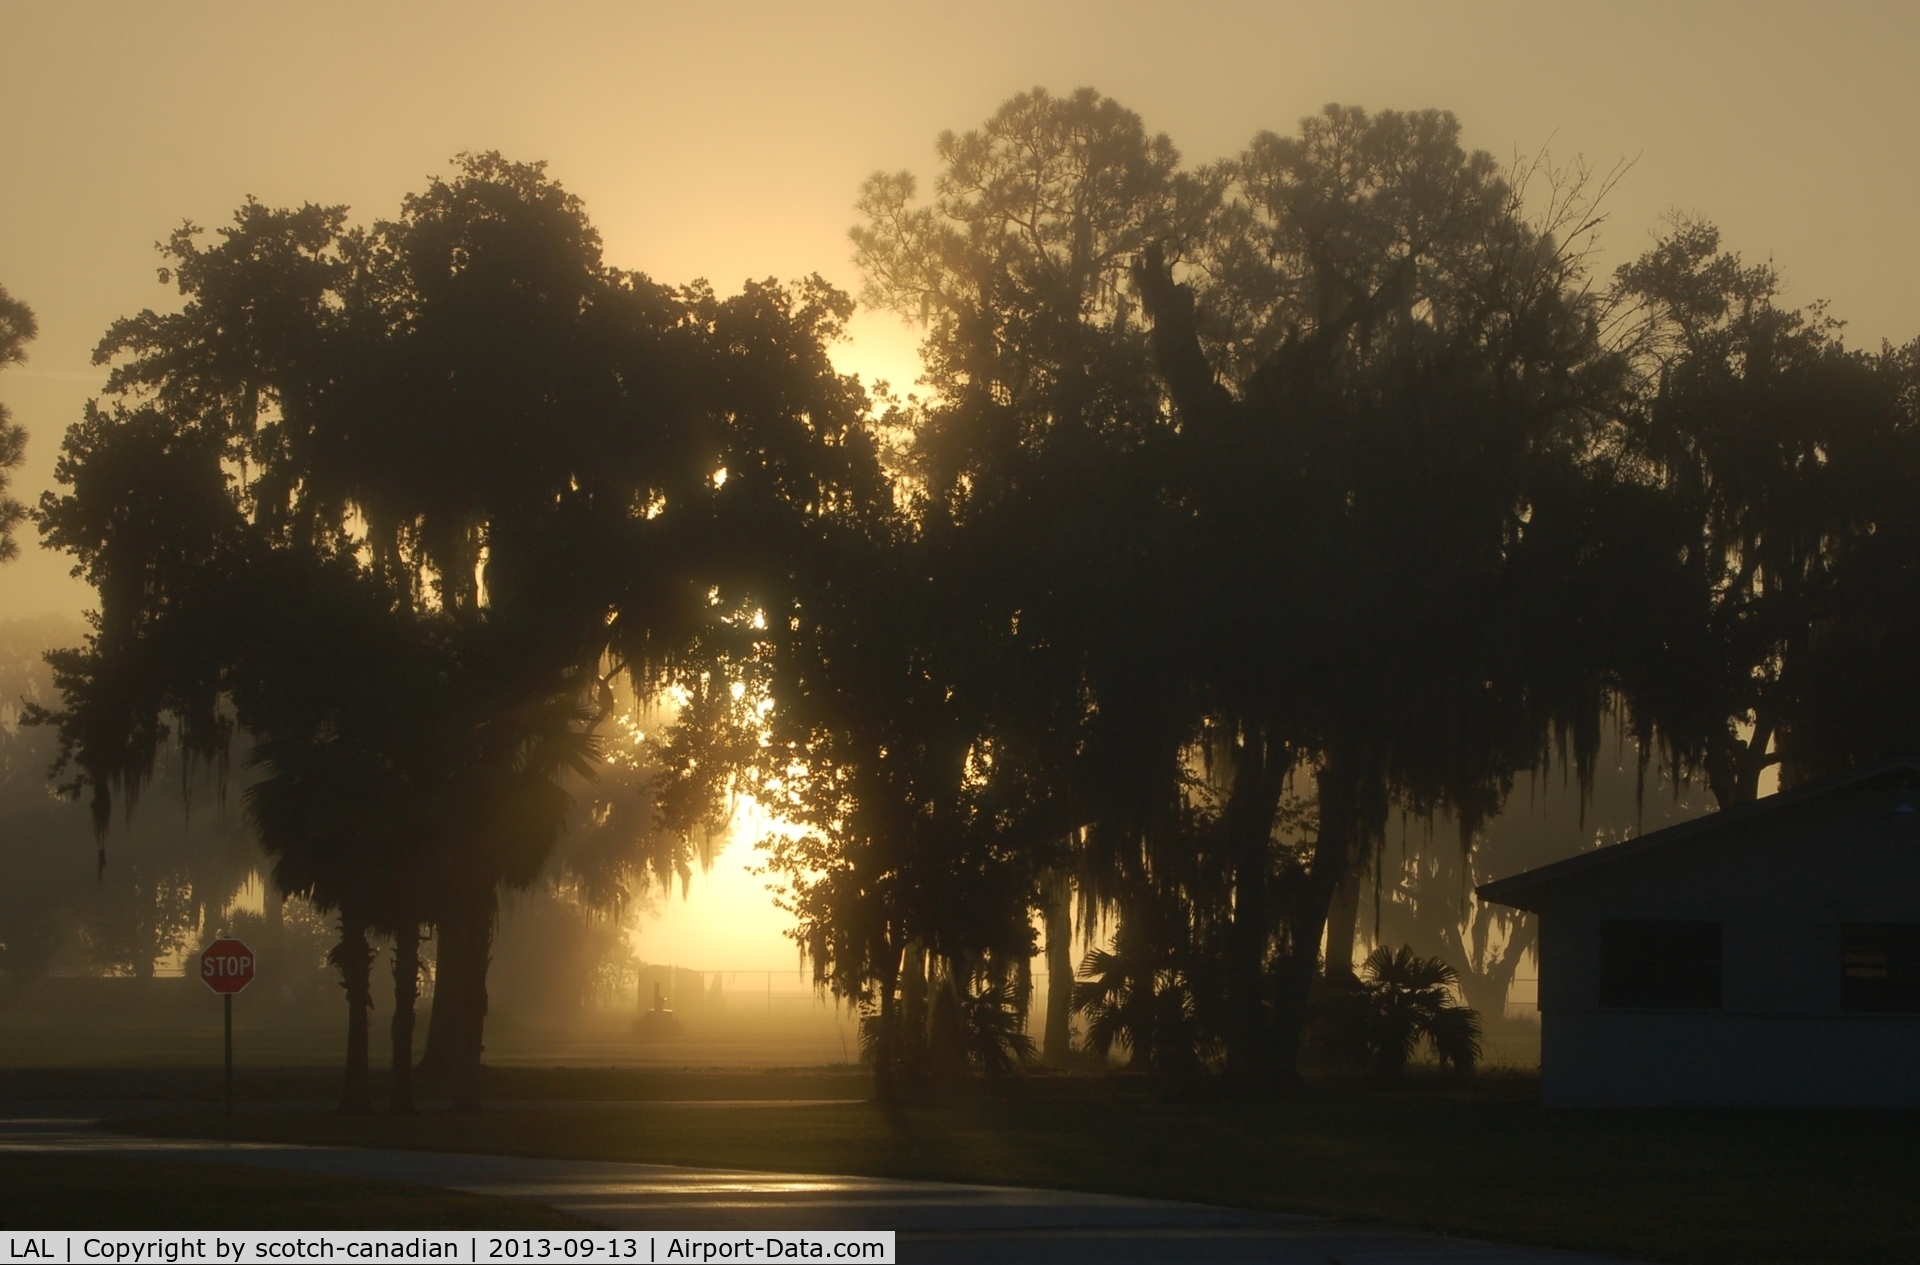 Lakeland Linder Regional Airport (LAL) - Sunrise on a Foggy Morning at Lakeland Linder Regional Airport, Lakeland, FL 